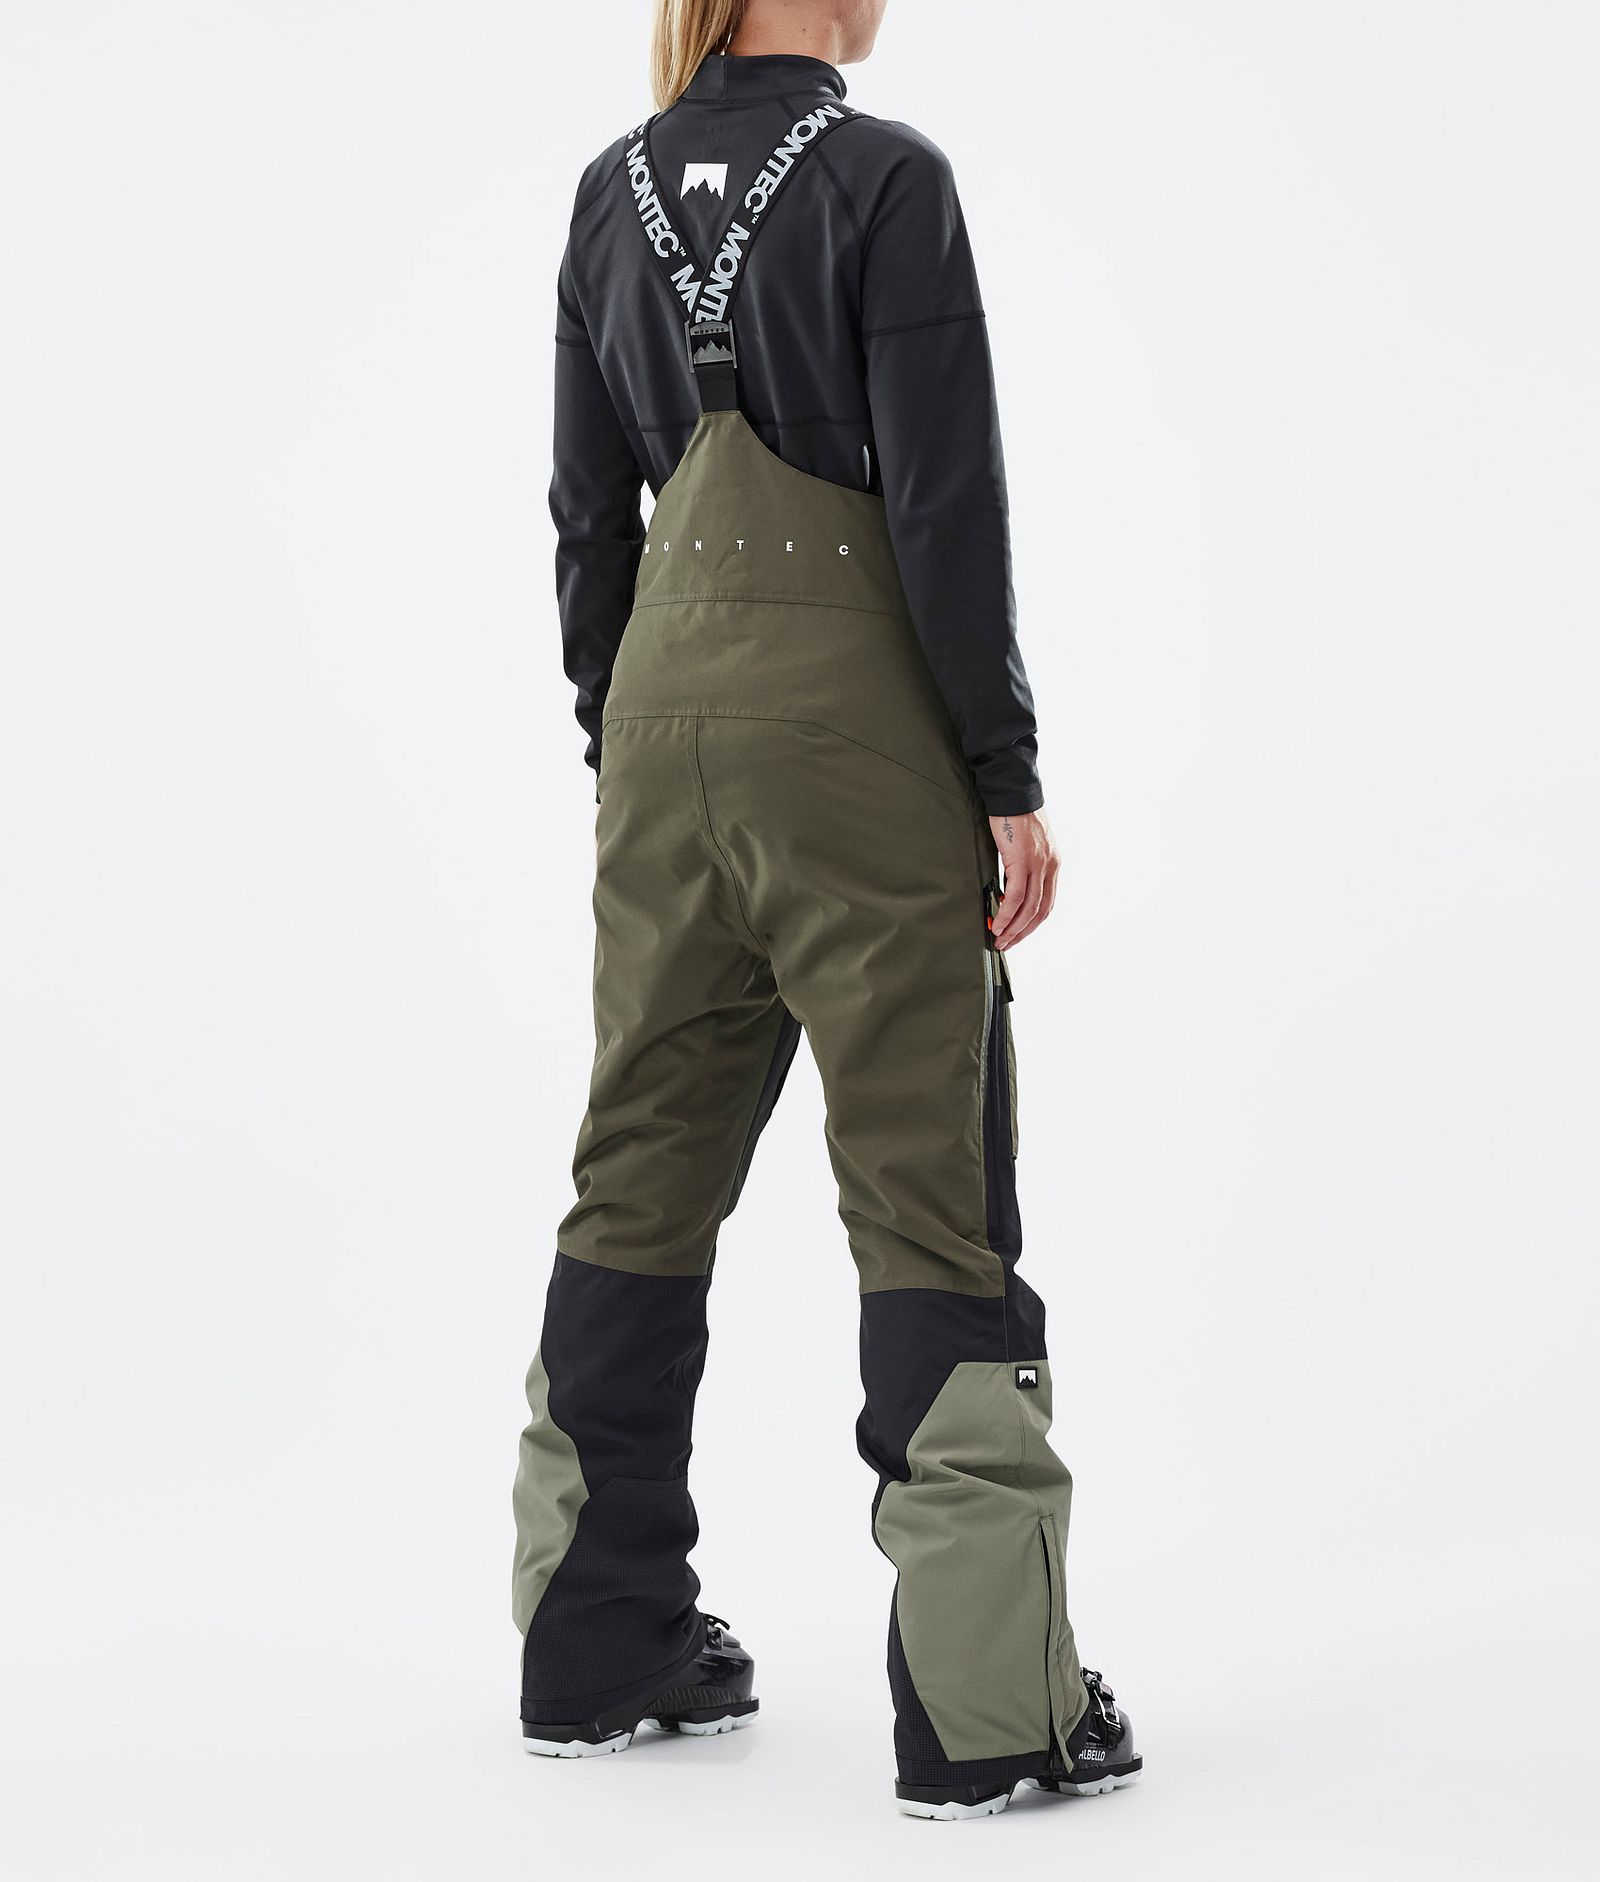 Montec Fawk W Pantalon de Ski Femme Olive Green/Black/Greenish